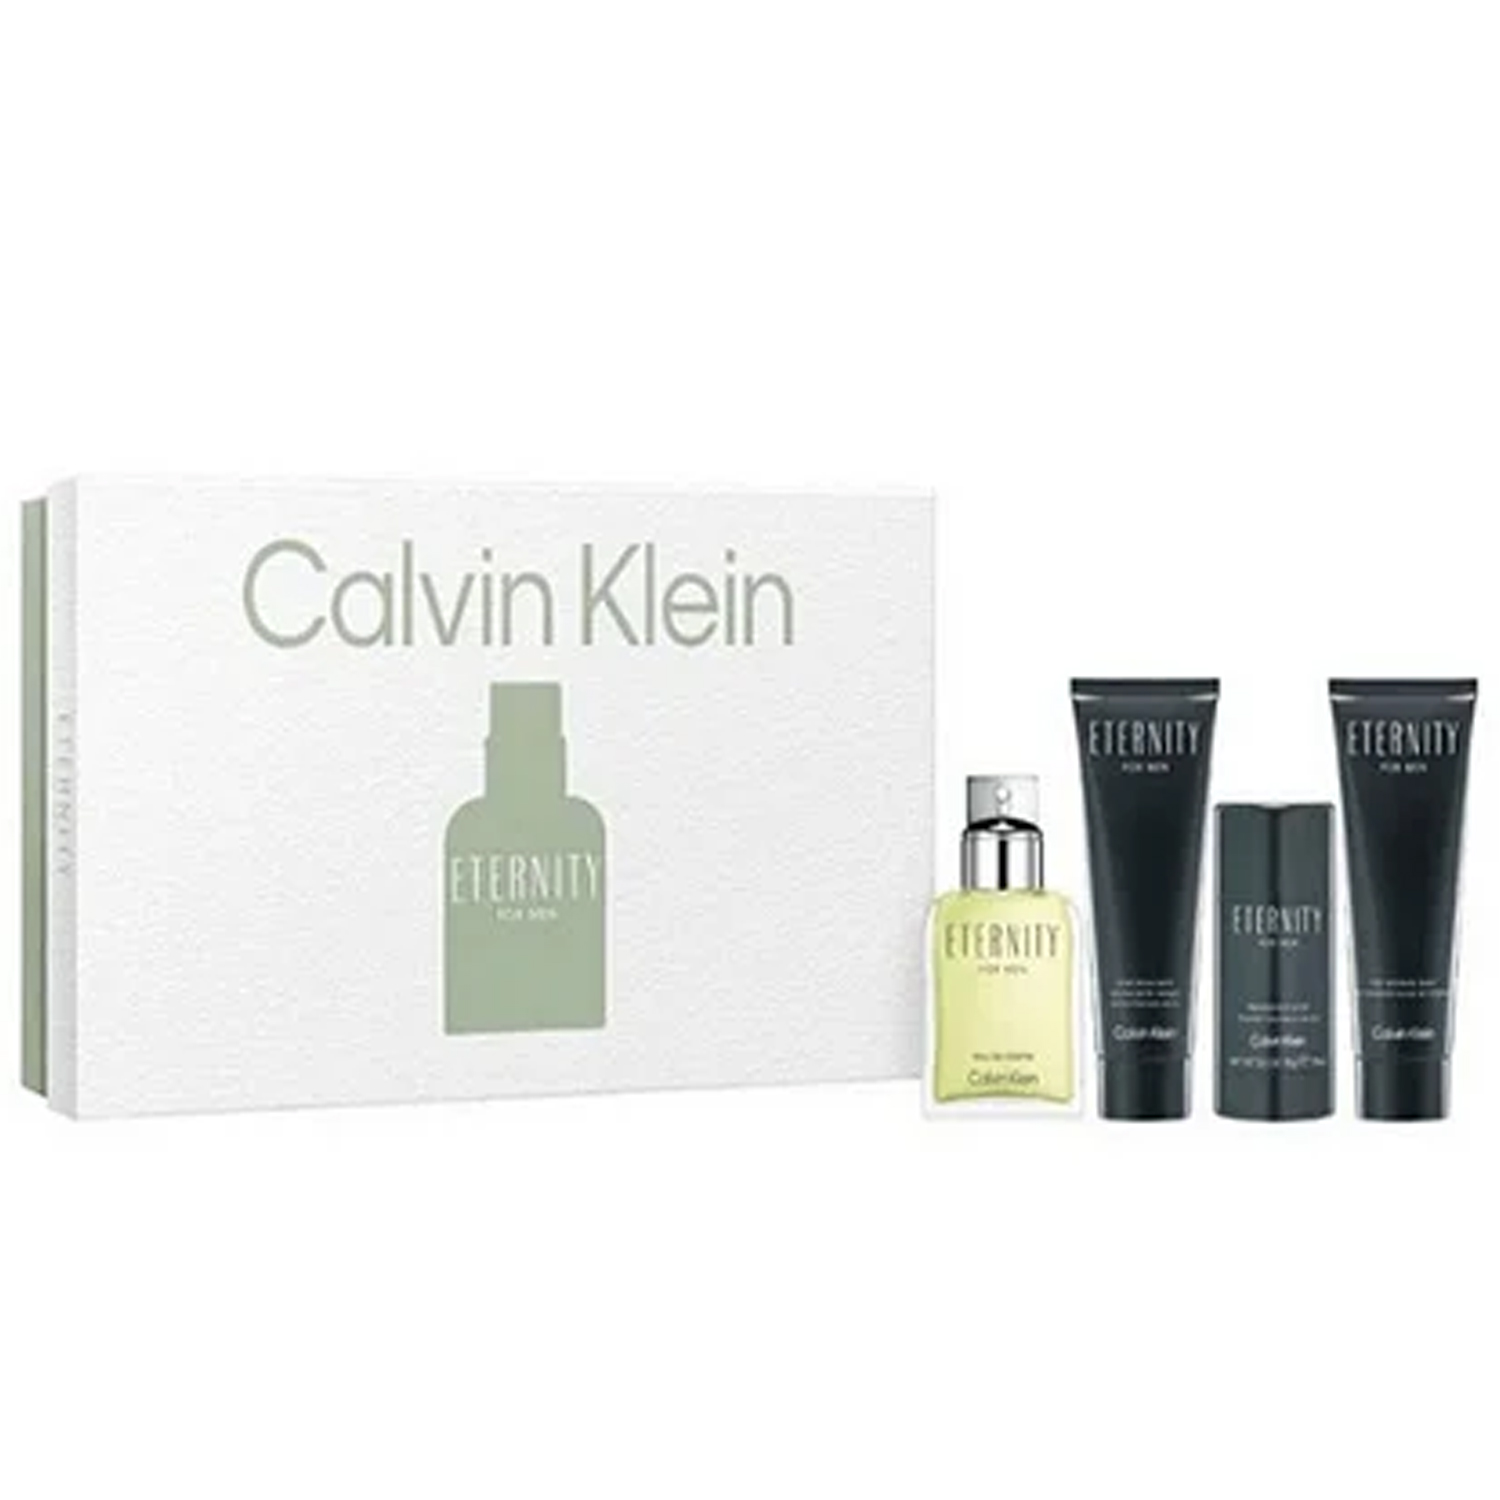 Kit Coffret Calvin Klein Eternity Men Kit - Perfume Masculino - EDT + Pós Barba + Desodorante